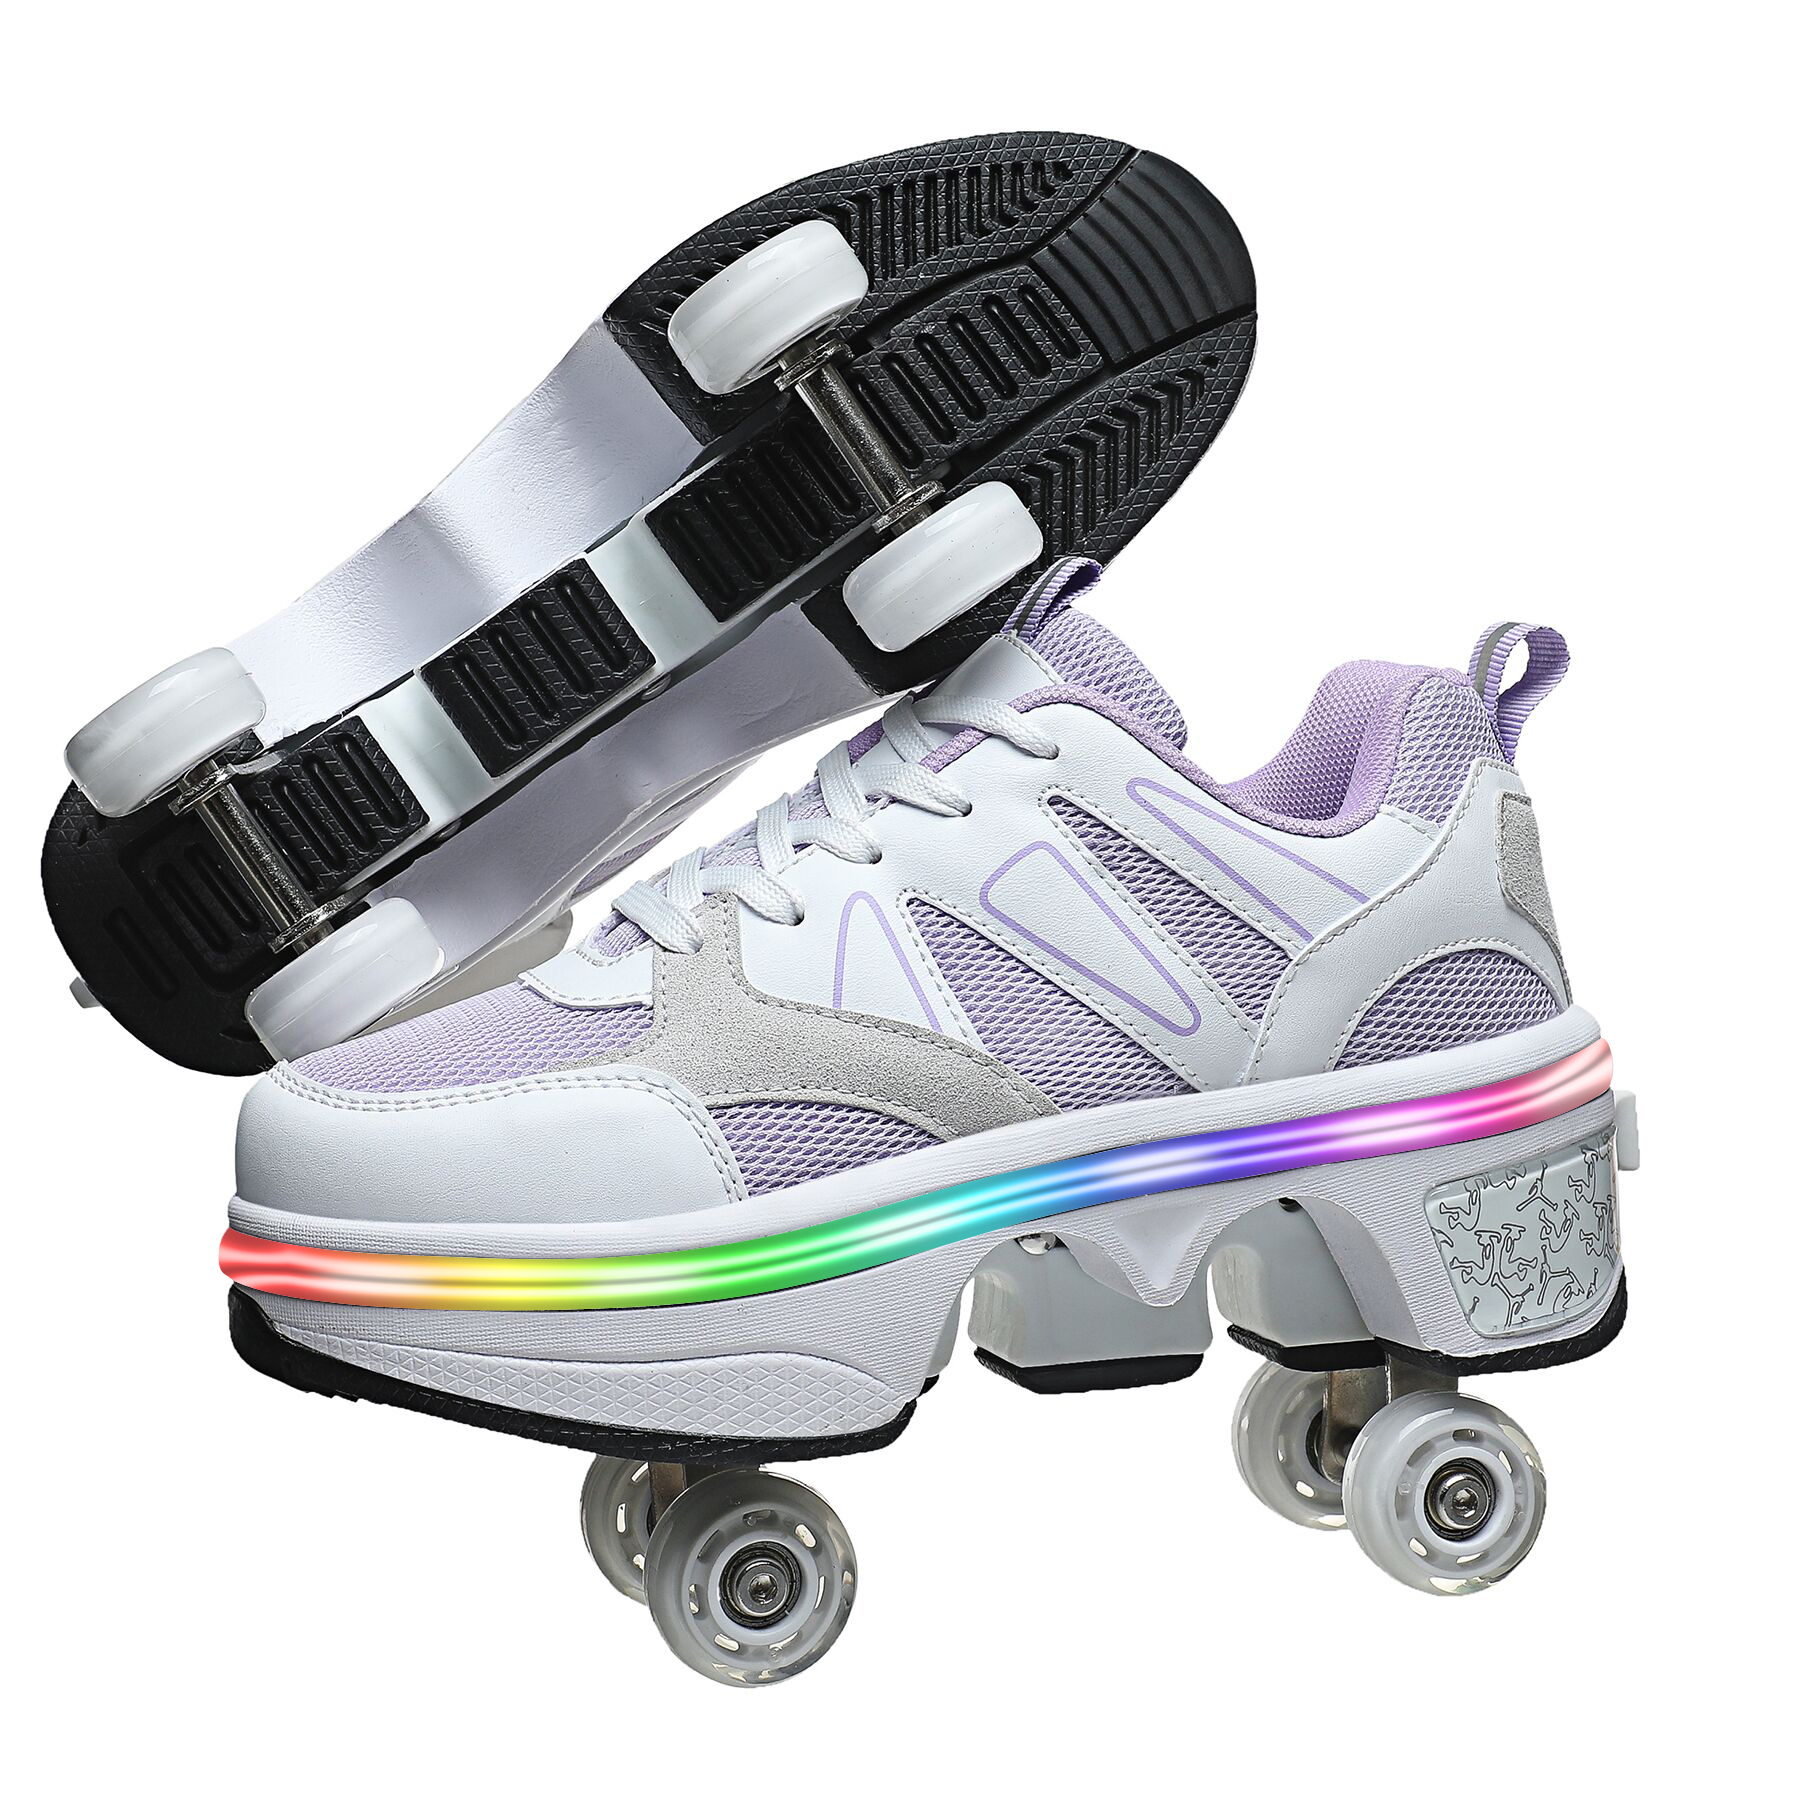 kofuboke抖音款暴走鞋儿童轮滑鞋隐形带轮成人电动氛围灯运动鞋